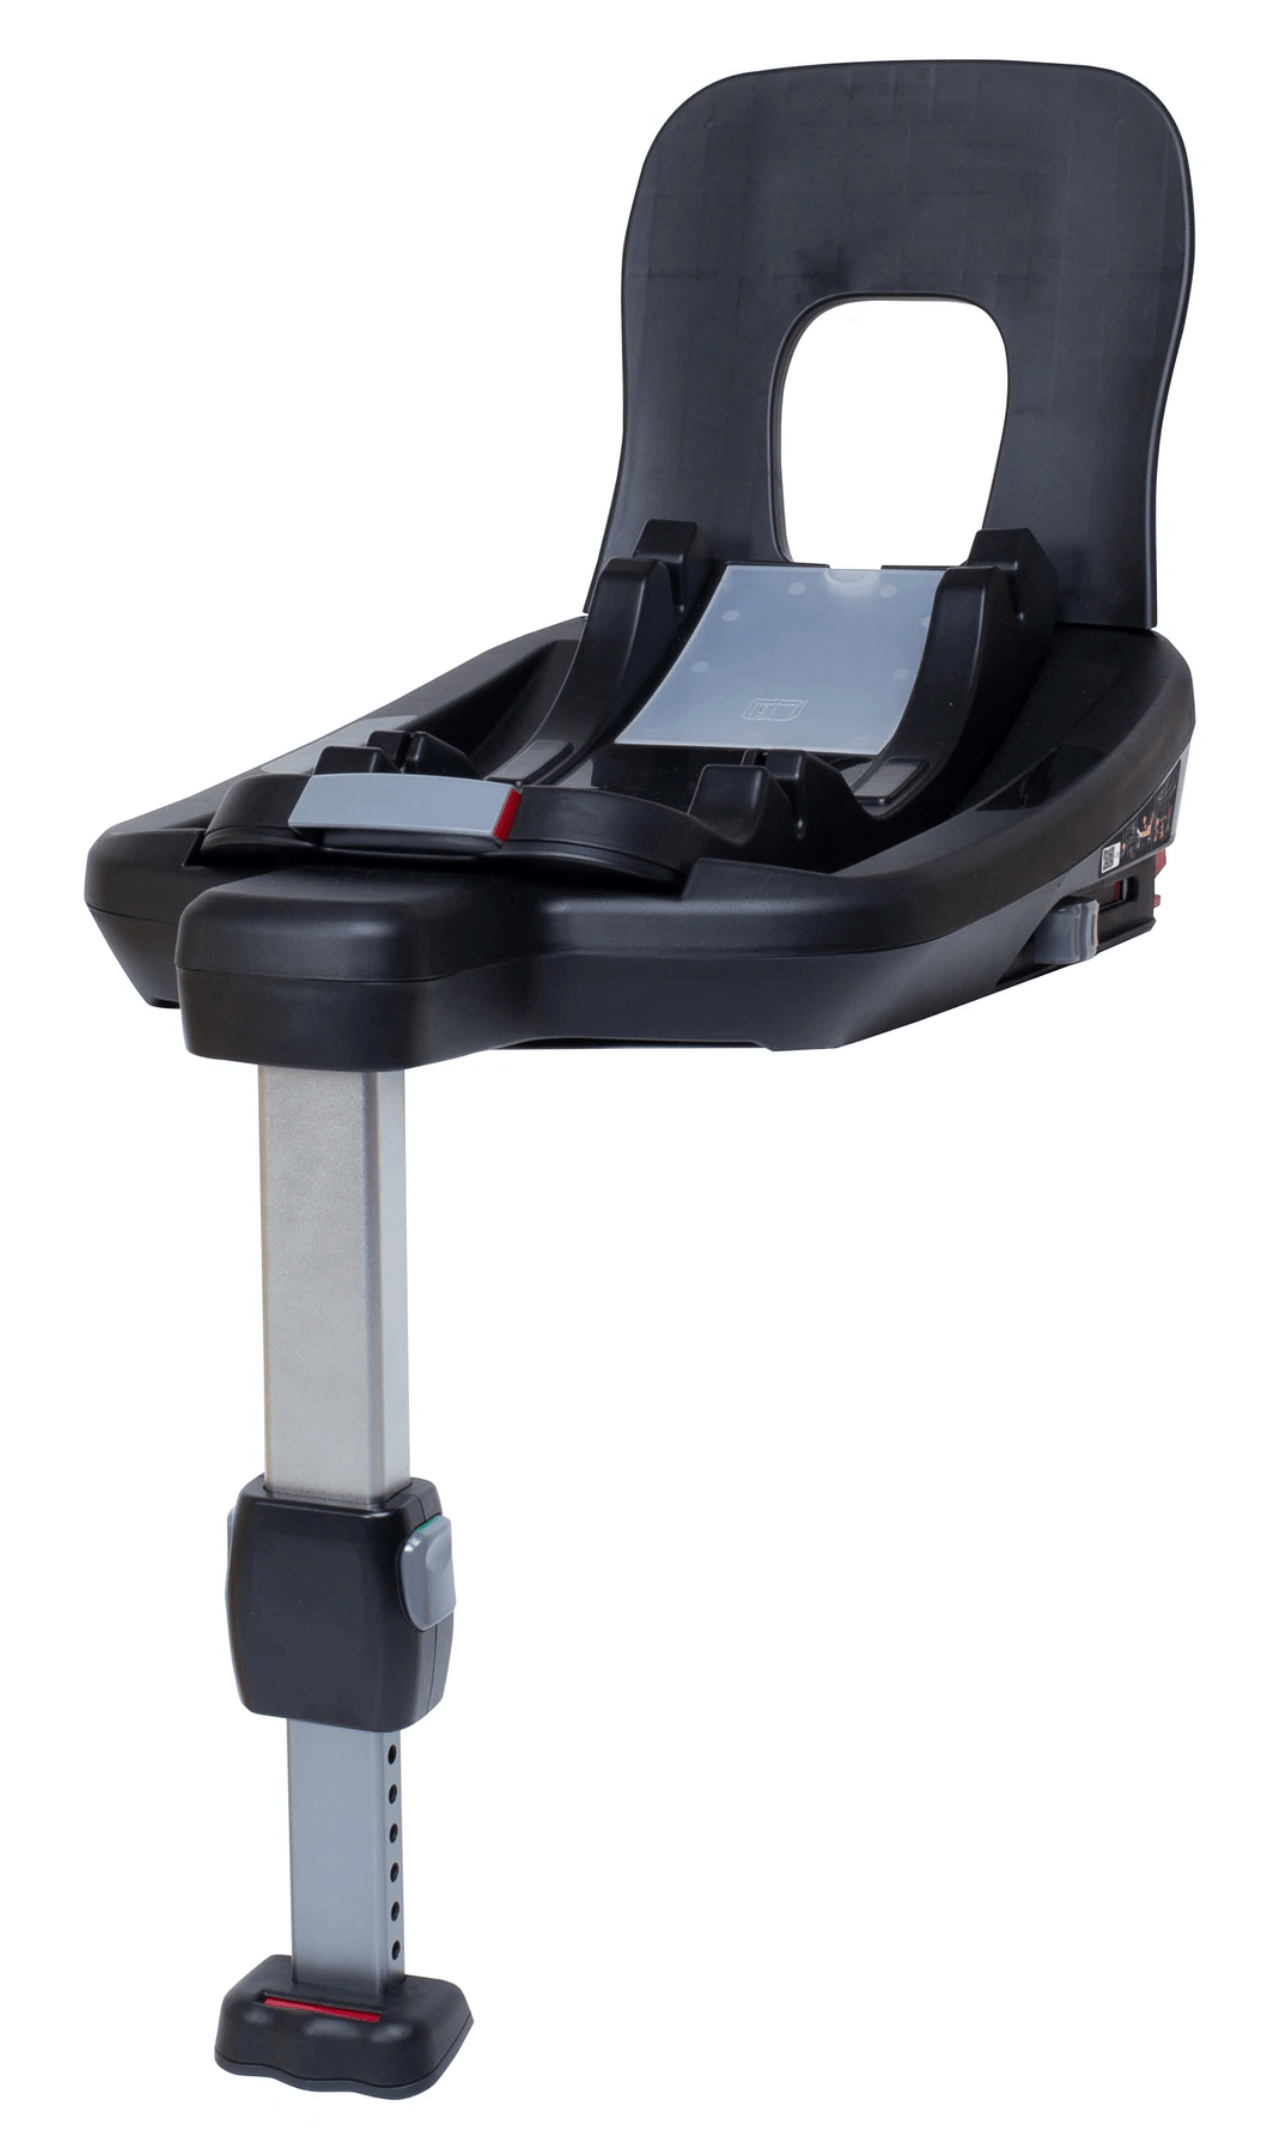 Cosatto Prams Cosatto Giggle Quad Car Seat and i-size Base Bundle - Direct Delivery